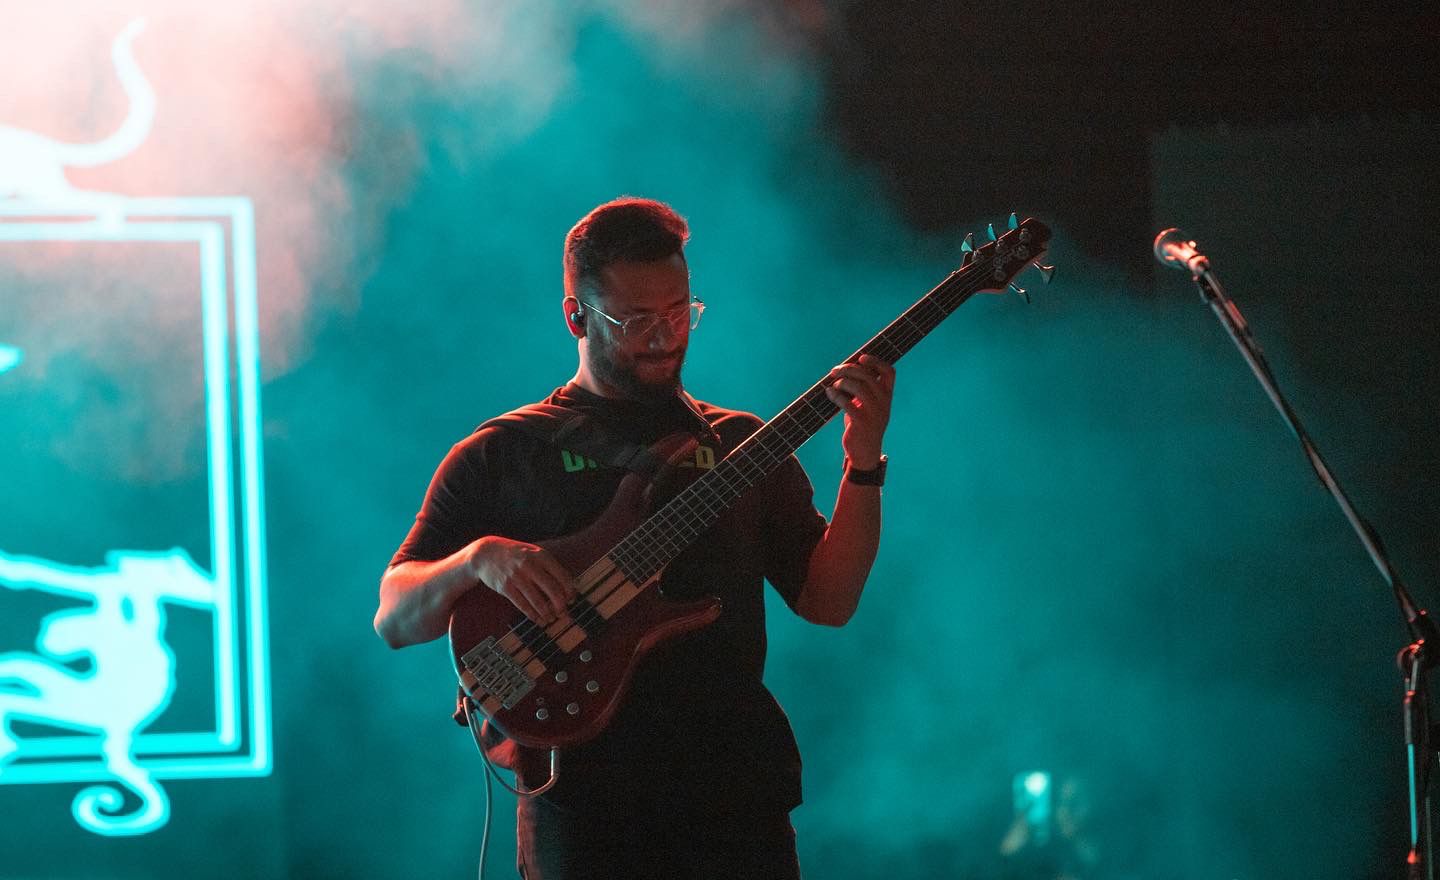 Bass Guitarist performing